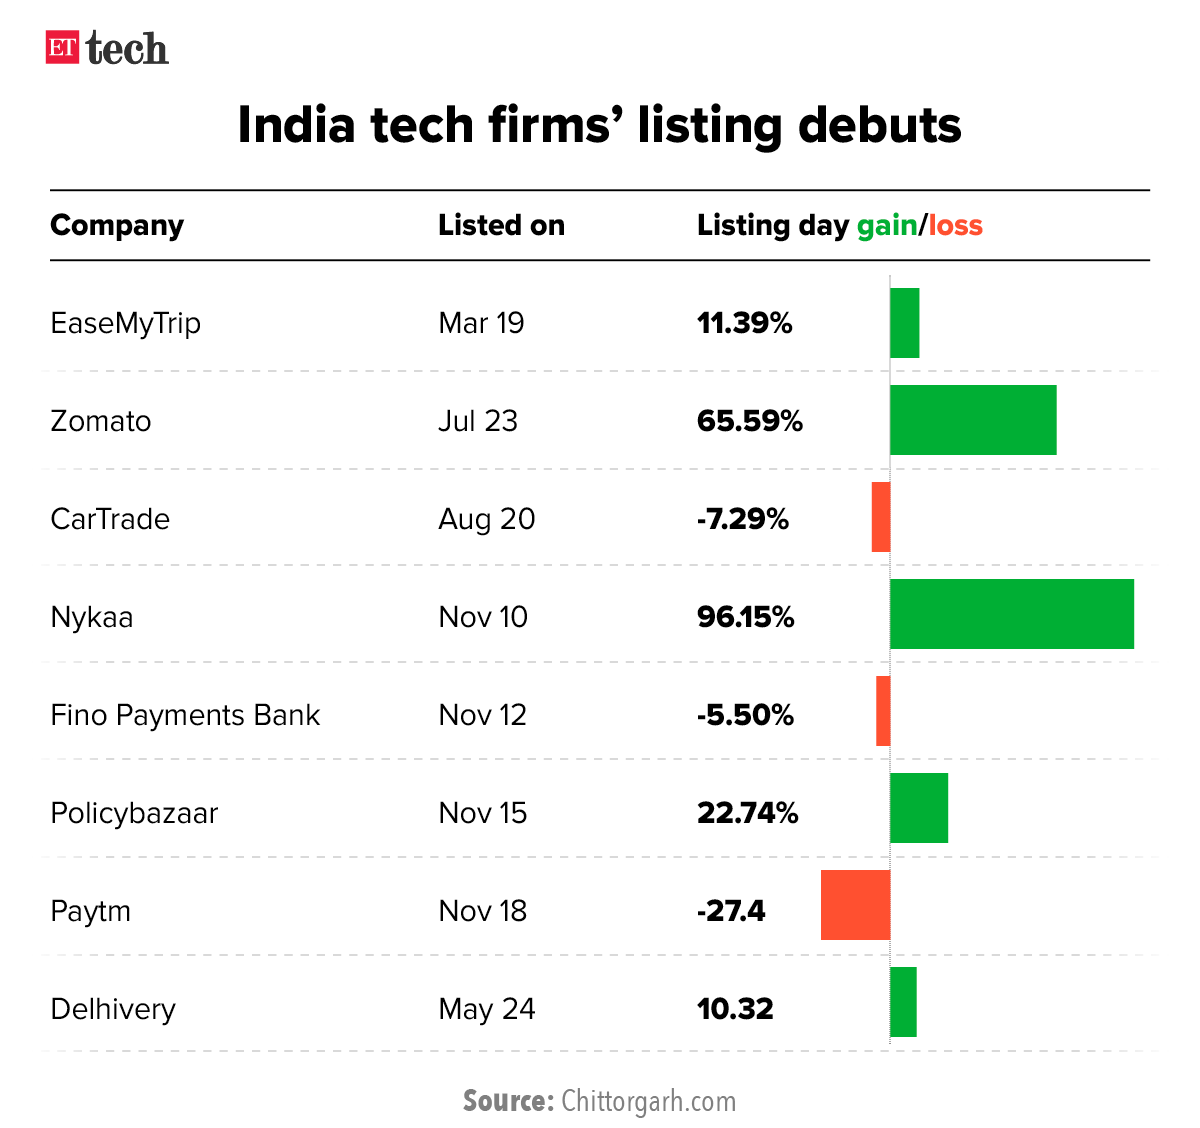 India tech firms debuts